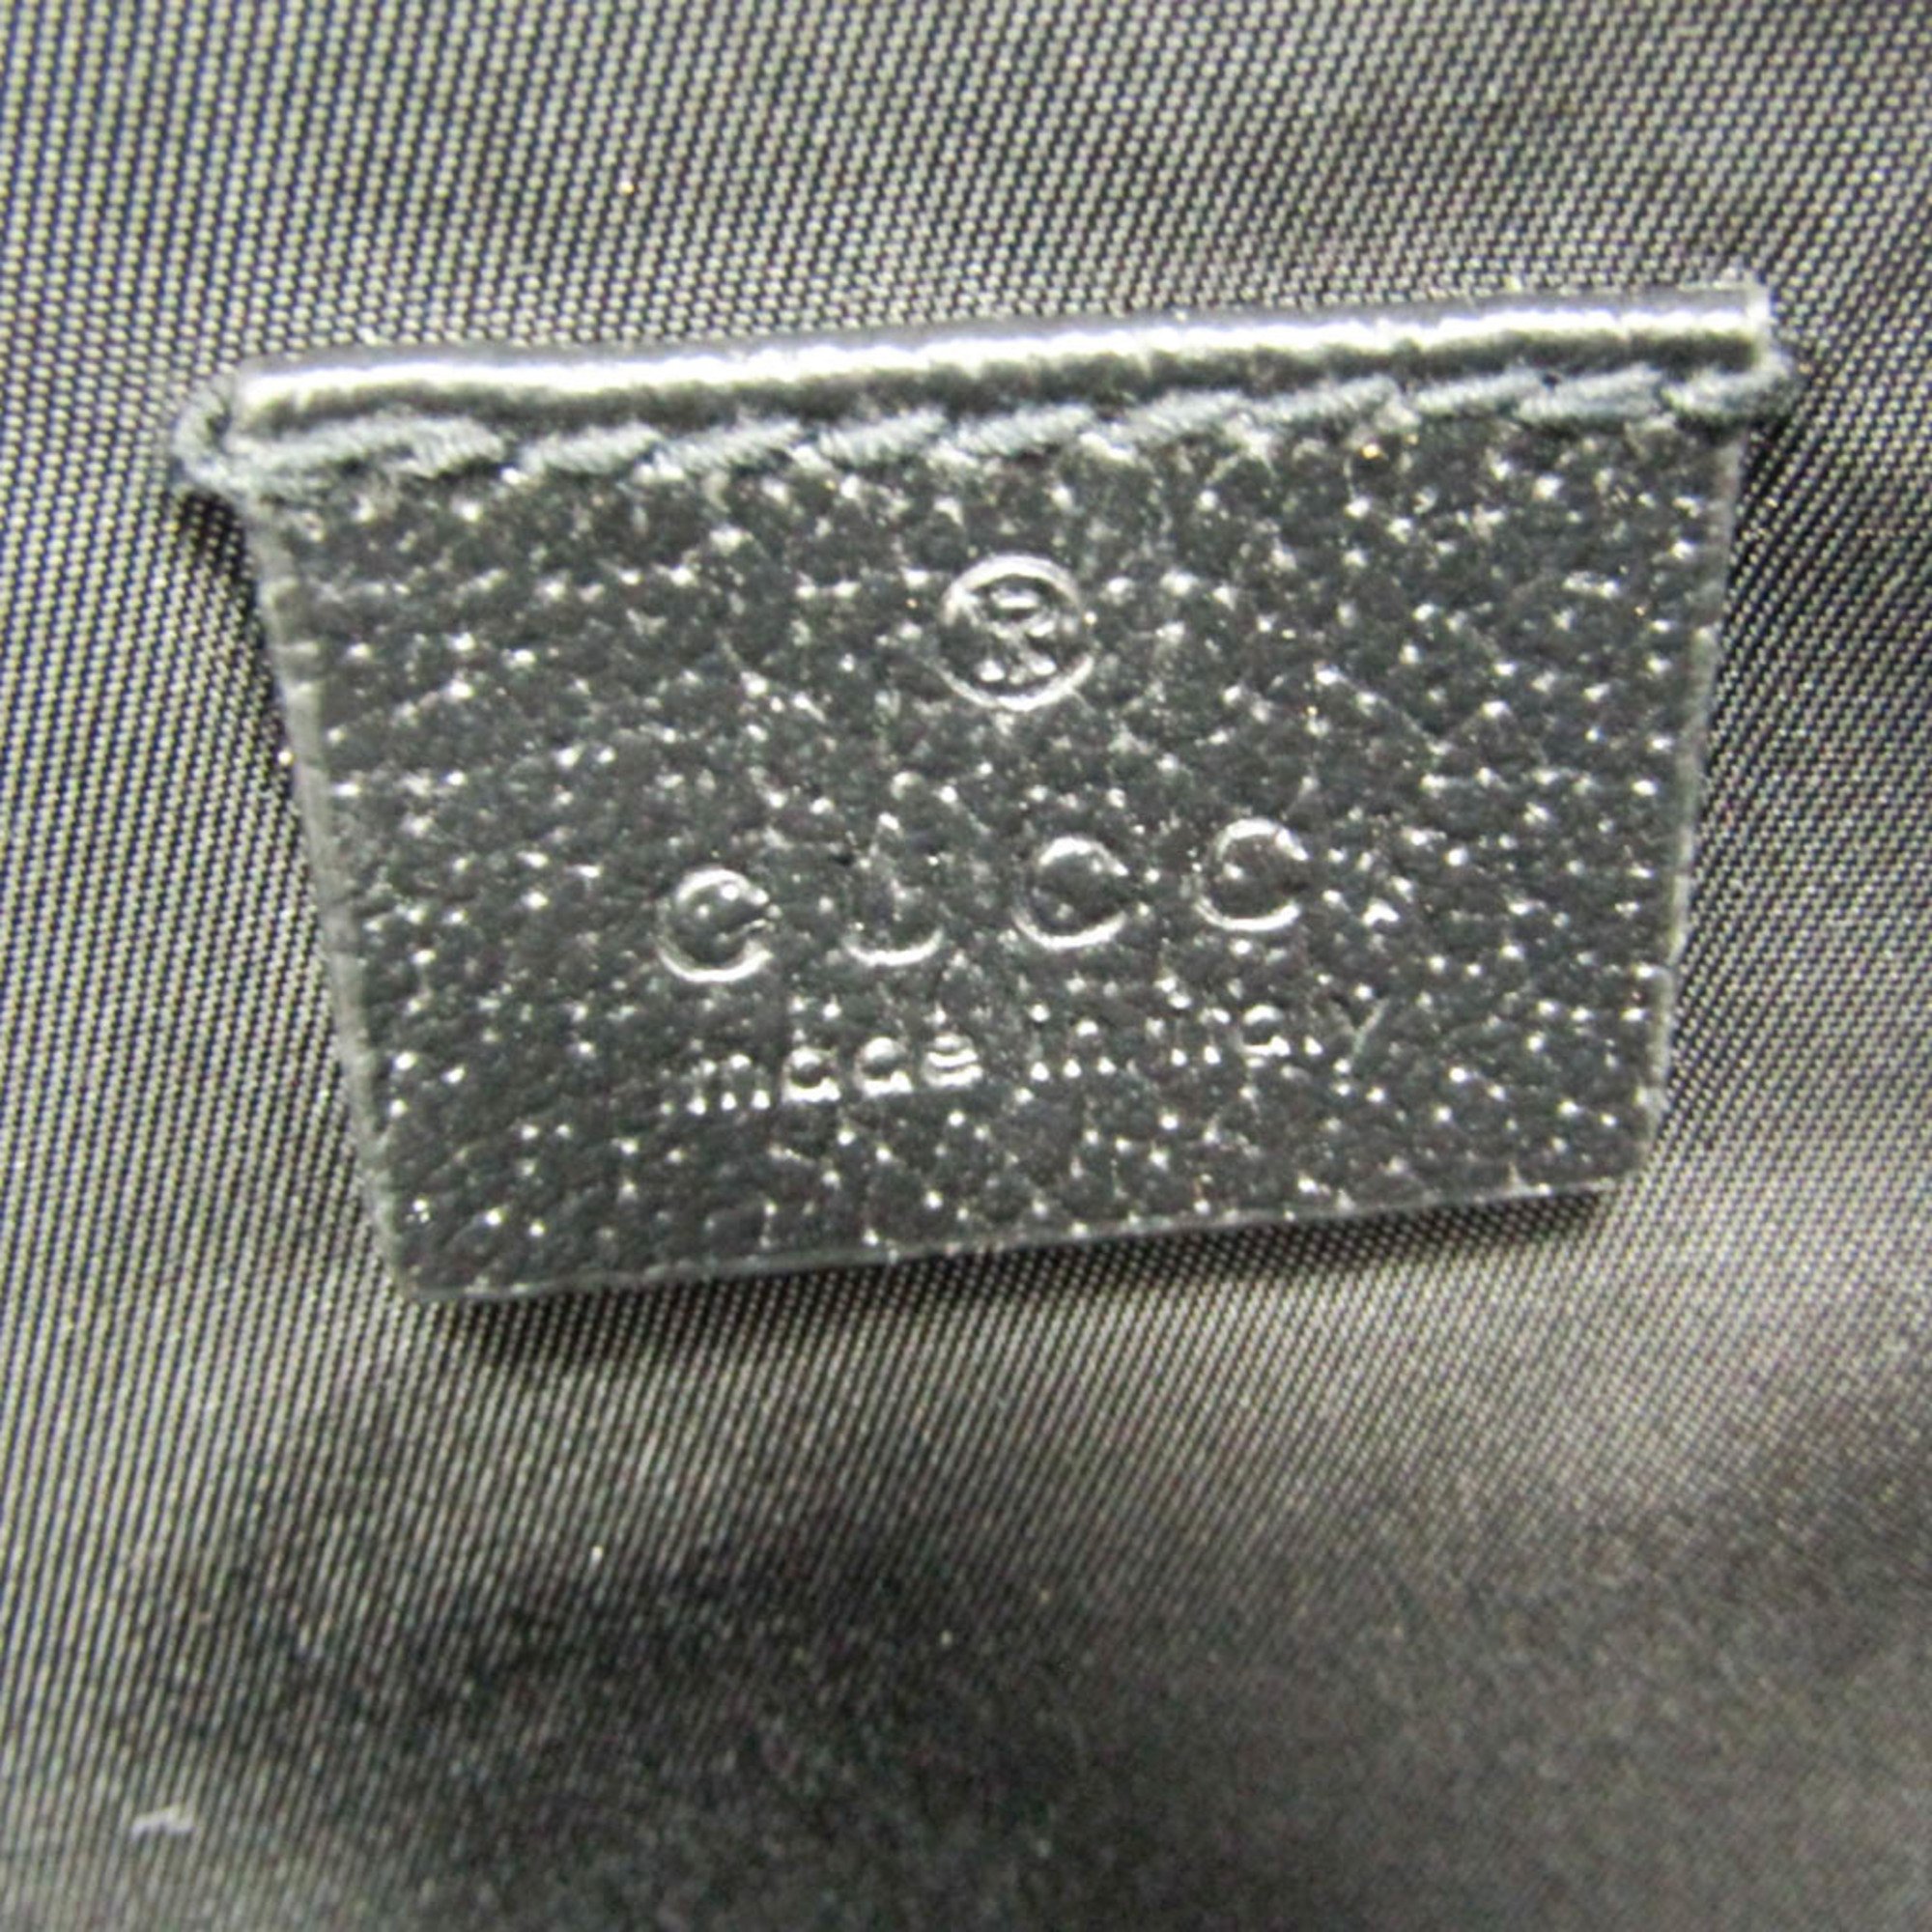 Gucci Off The Grid 674299 Men's Nylon Shoulder Bag Black